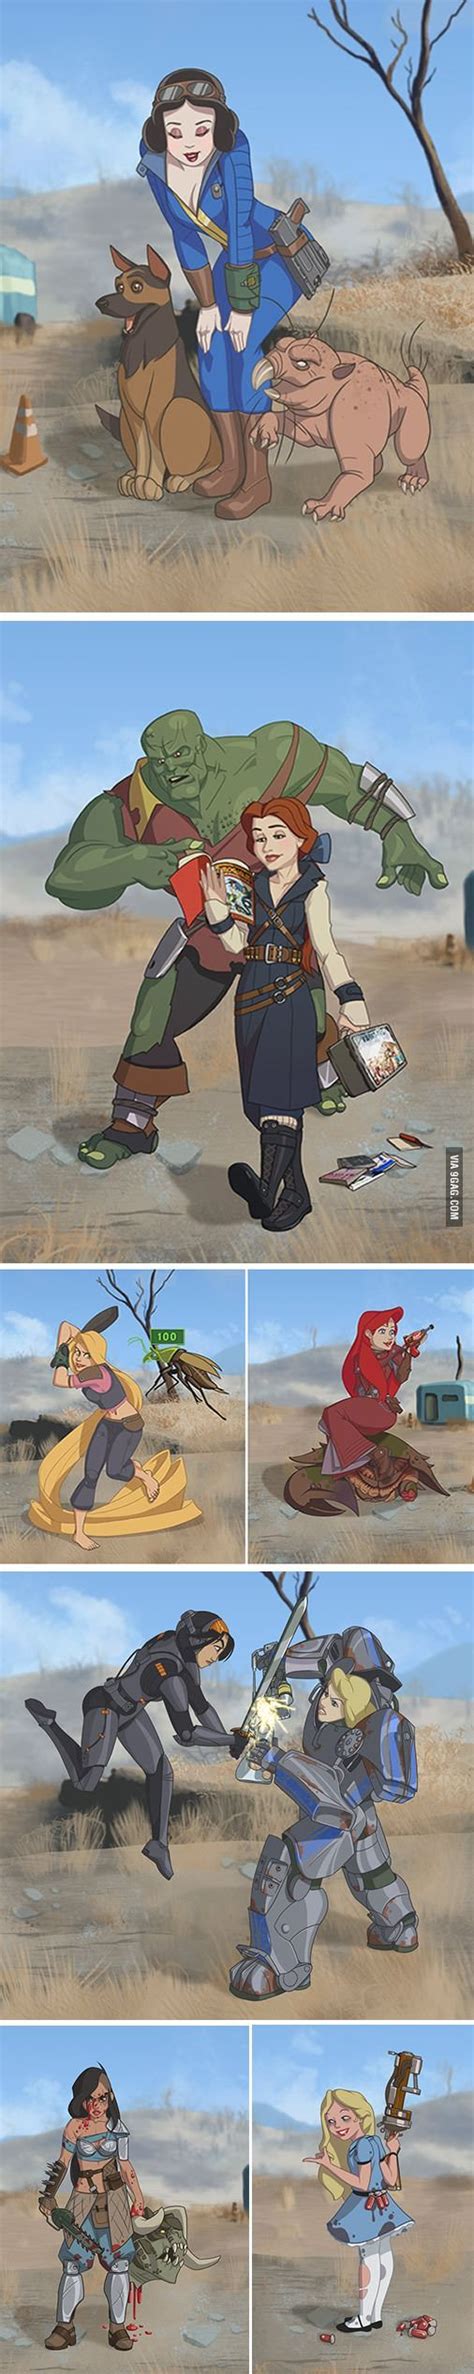 Disney Princesses In Fallout Gaming Fallout Art Fallout Game